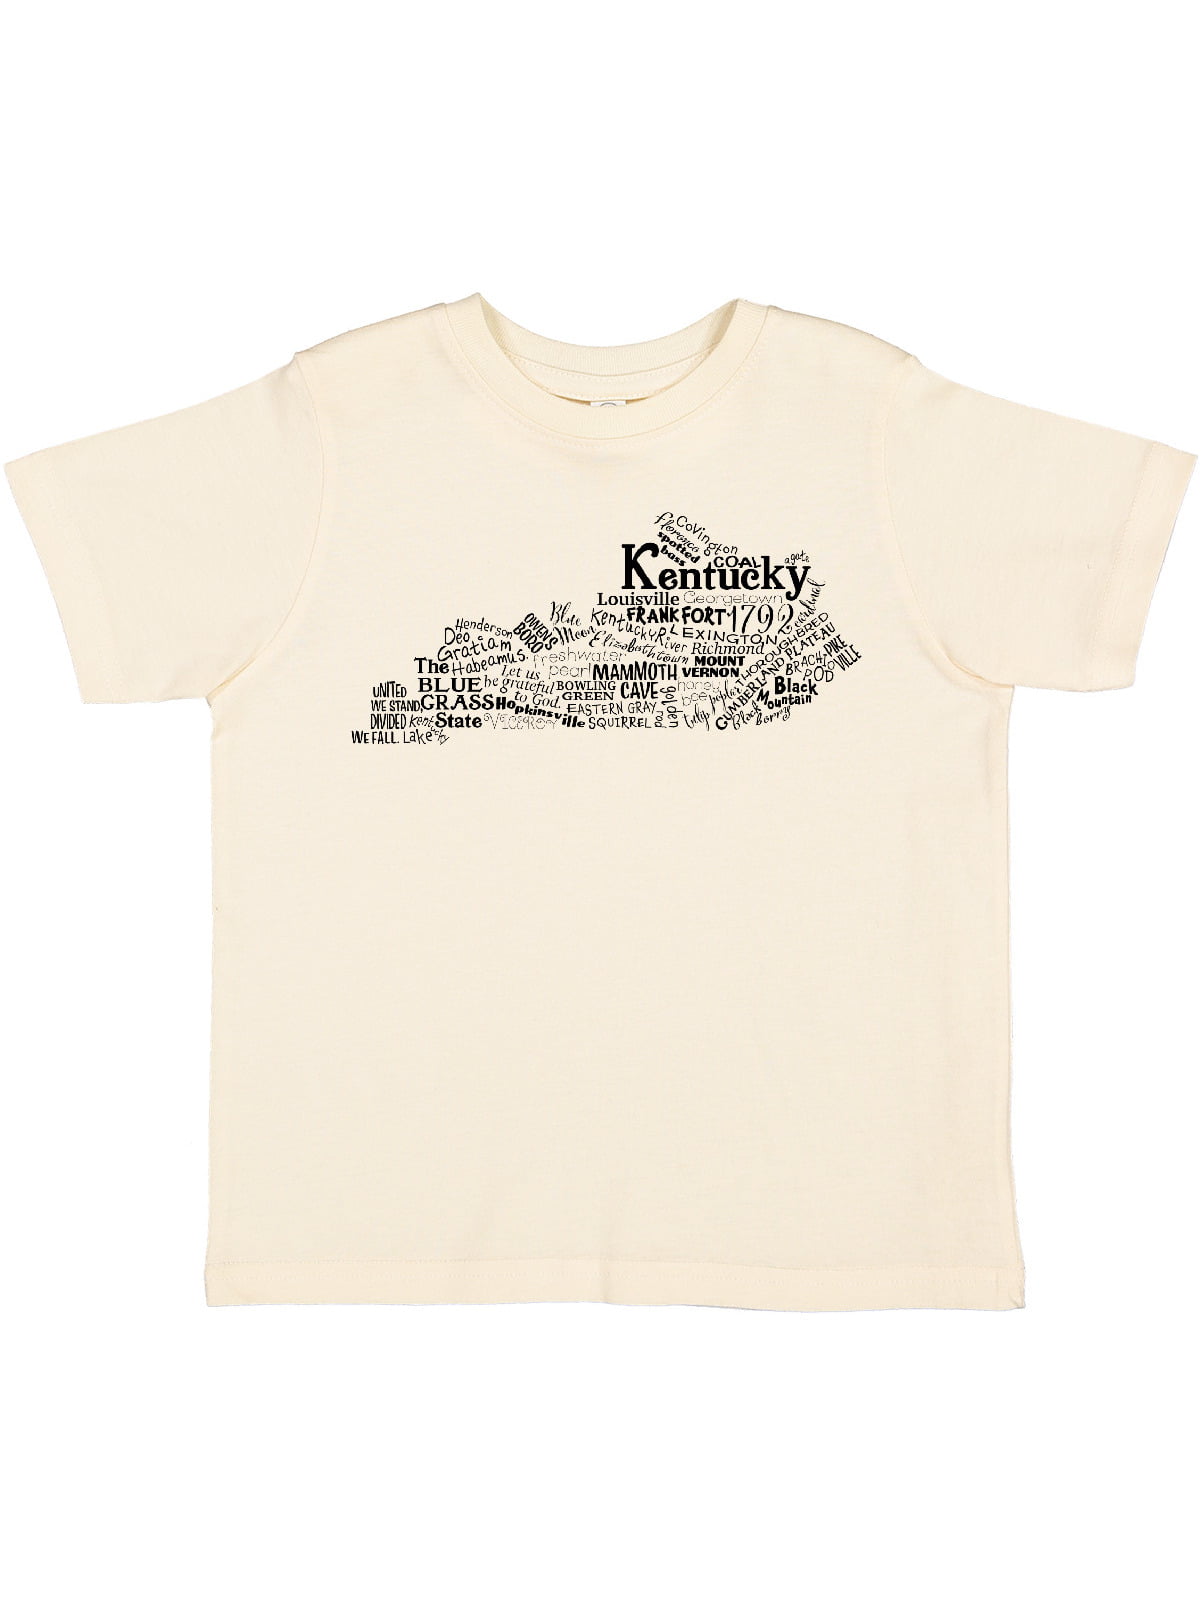 Inktastic Louisville Kentucky Someone Loves Me Gift Toddler Boy or Toddler Girl T-Shirt, Toddler Girl's, Size: 4T, Black